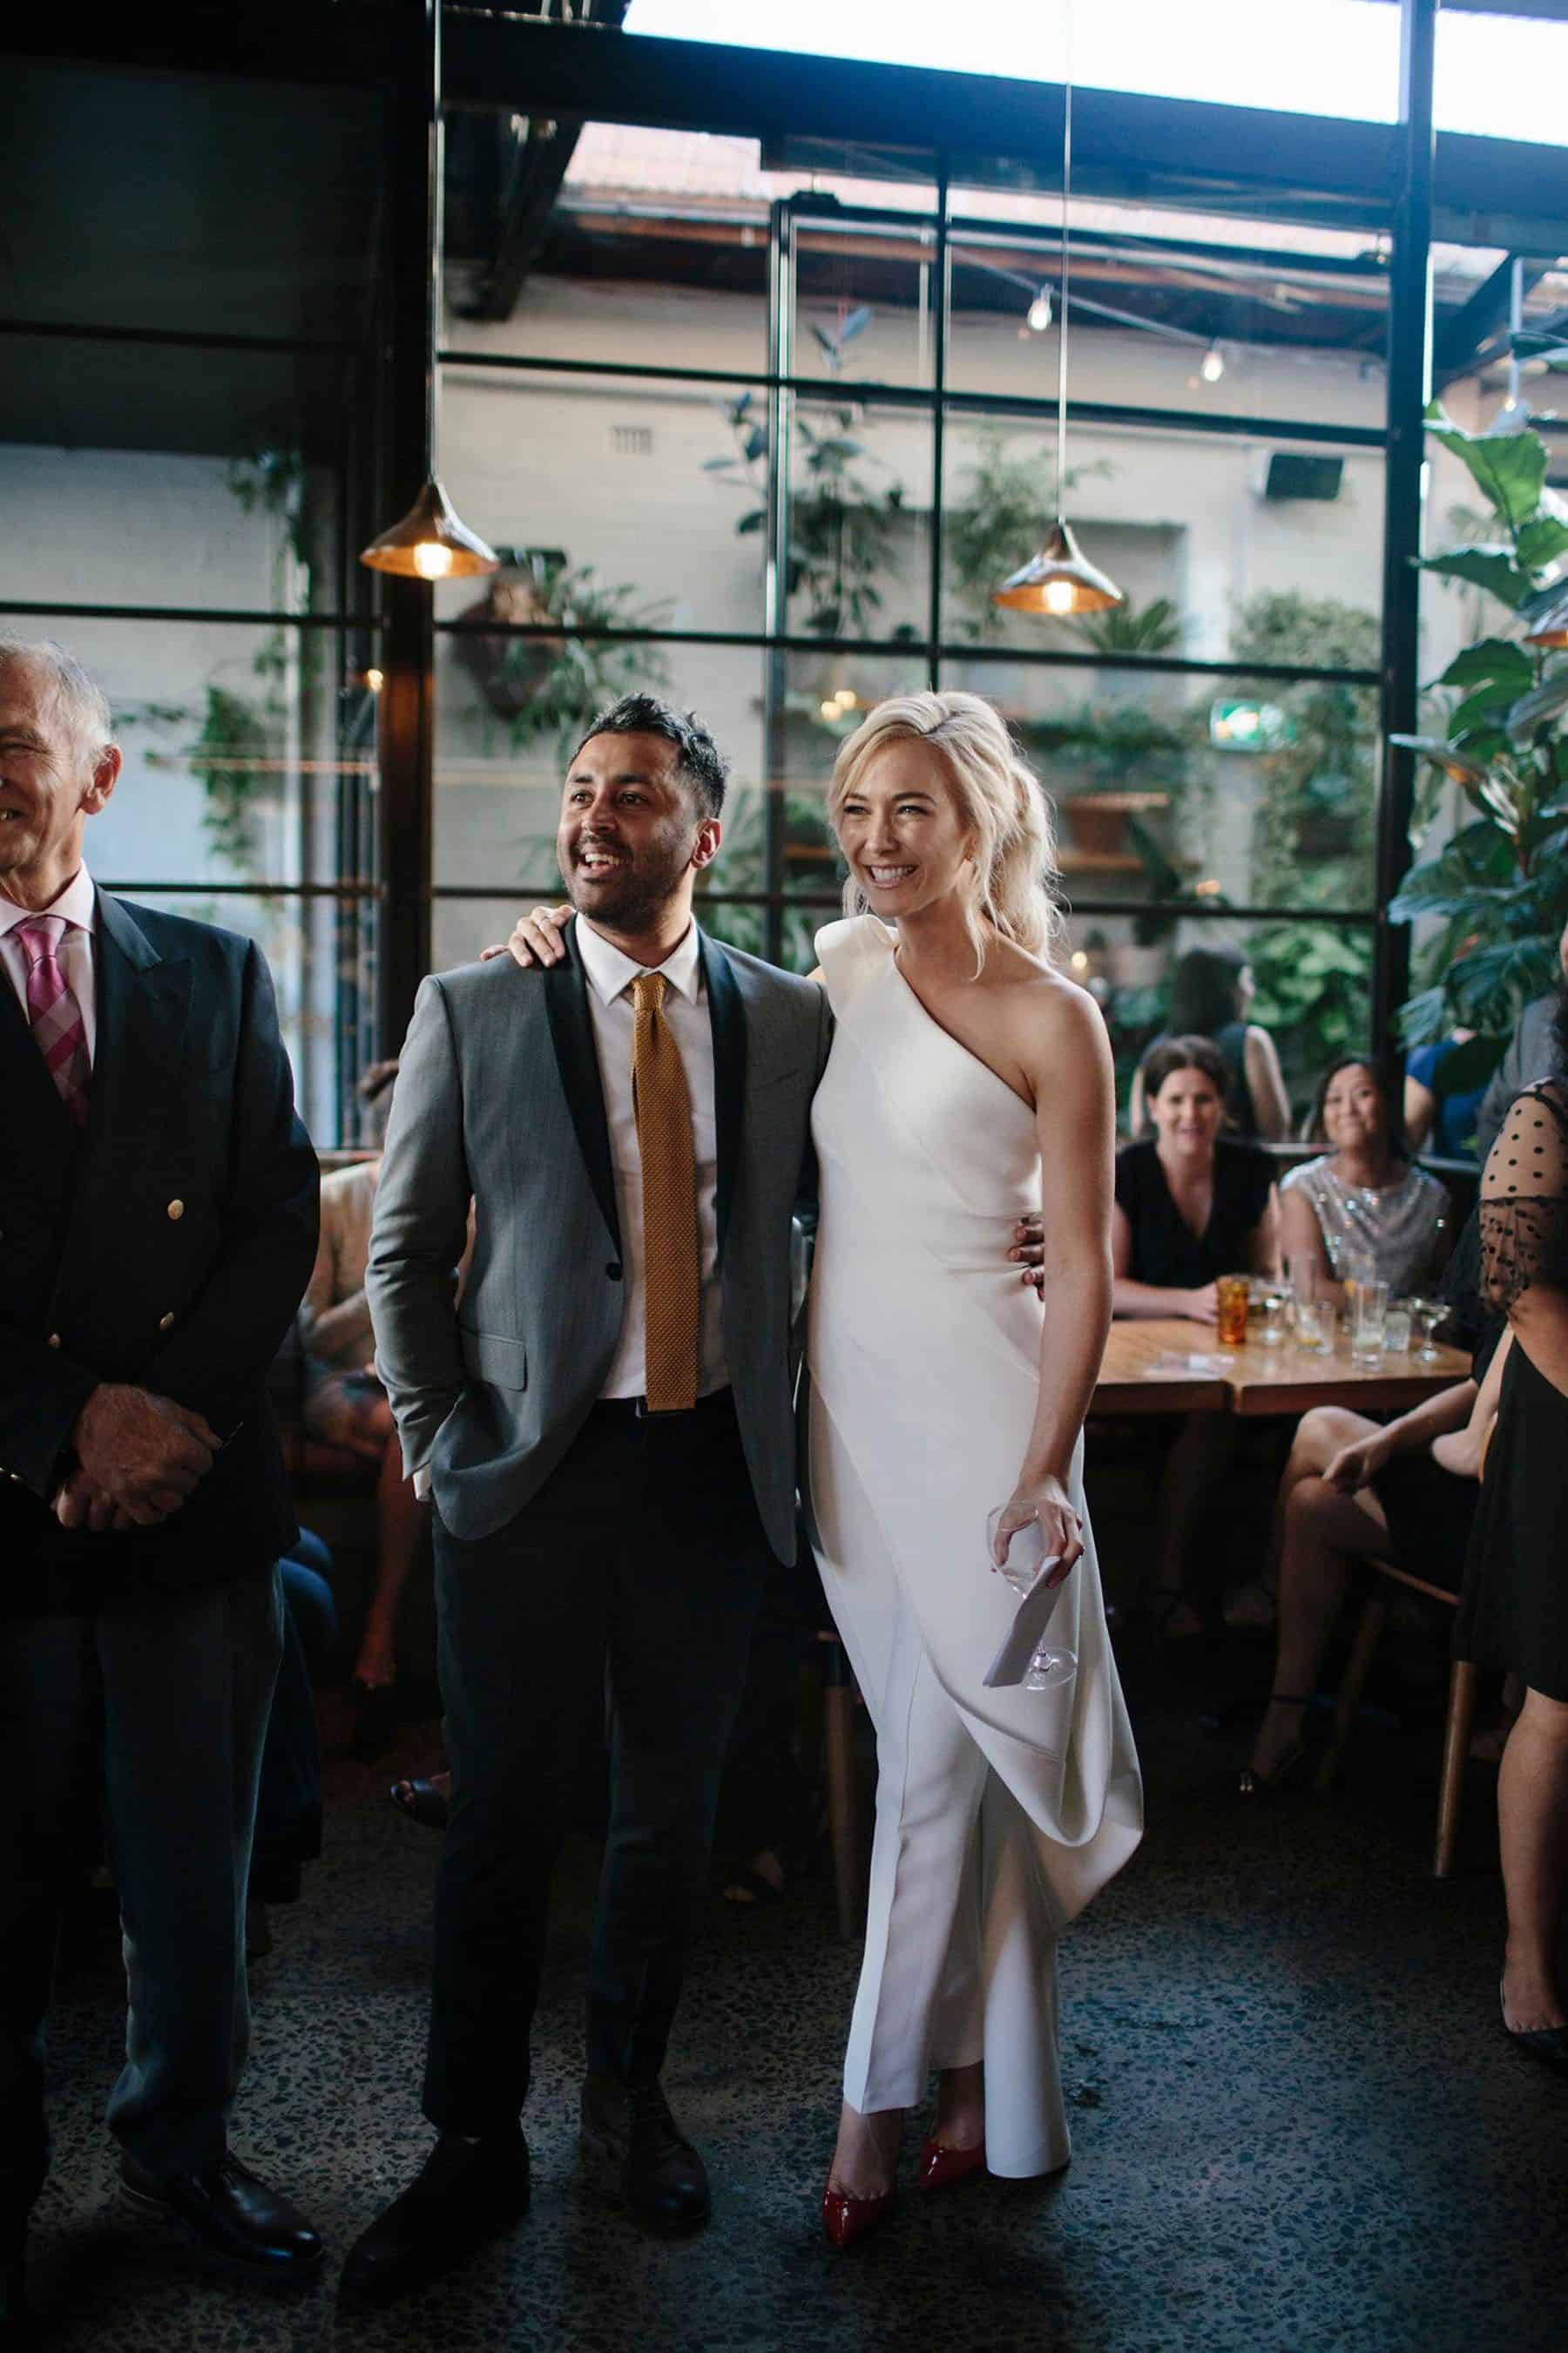 Best bridal styles of 2019 - modern wedding jumpsuit